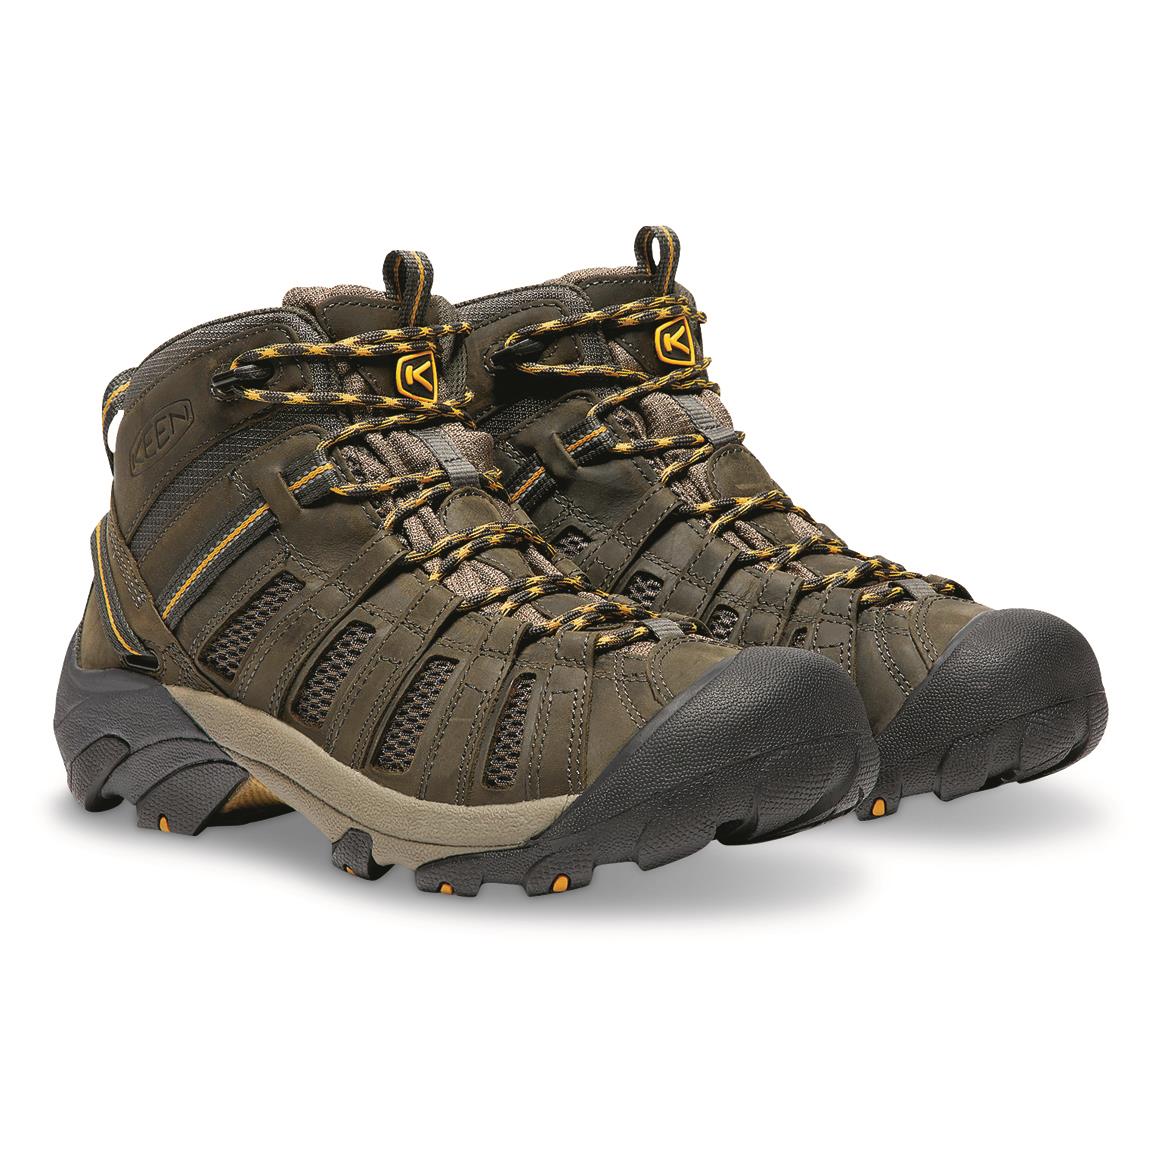 KEEN Men's Voyageur Mid Hiking Boots, Raven/Tawny Olive